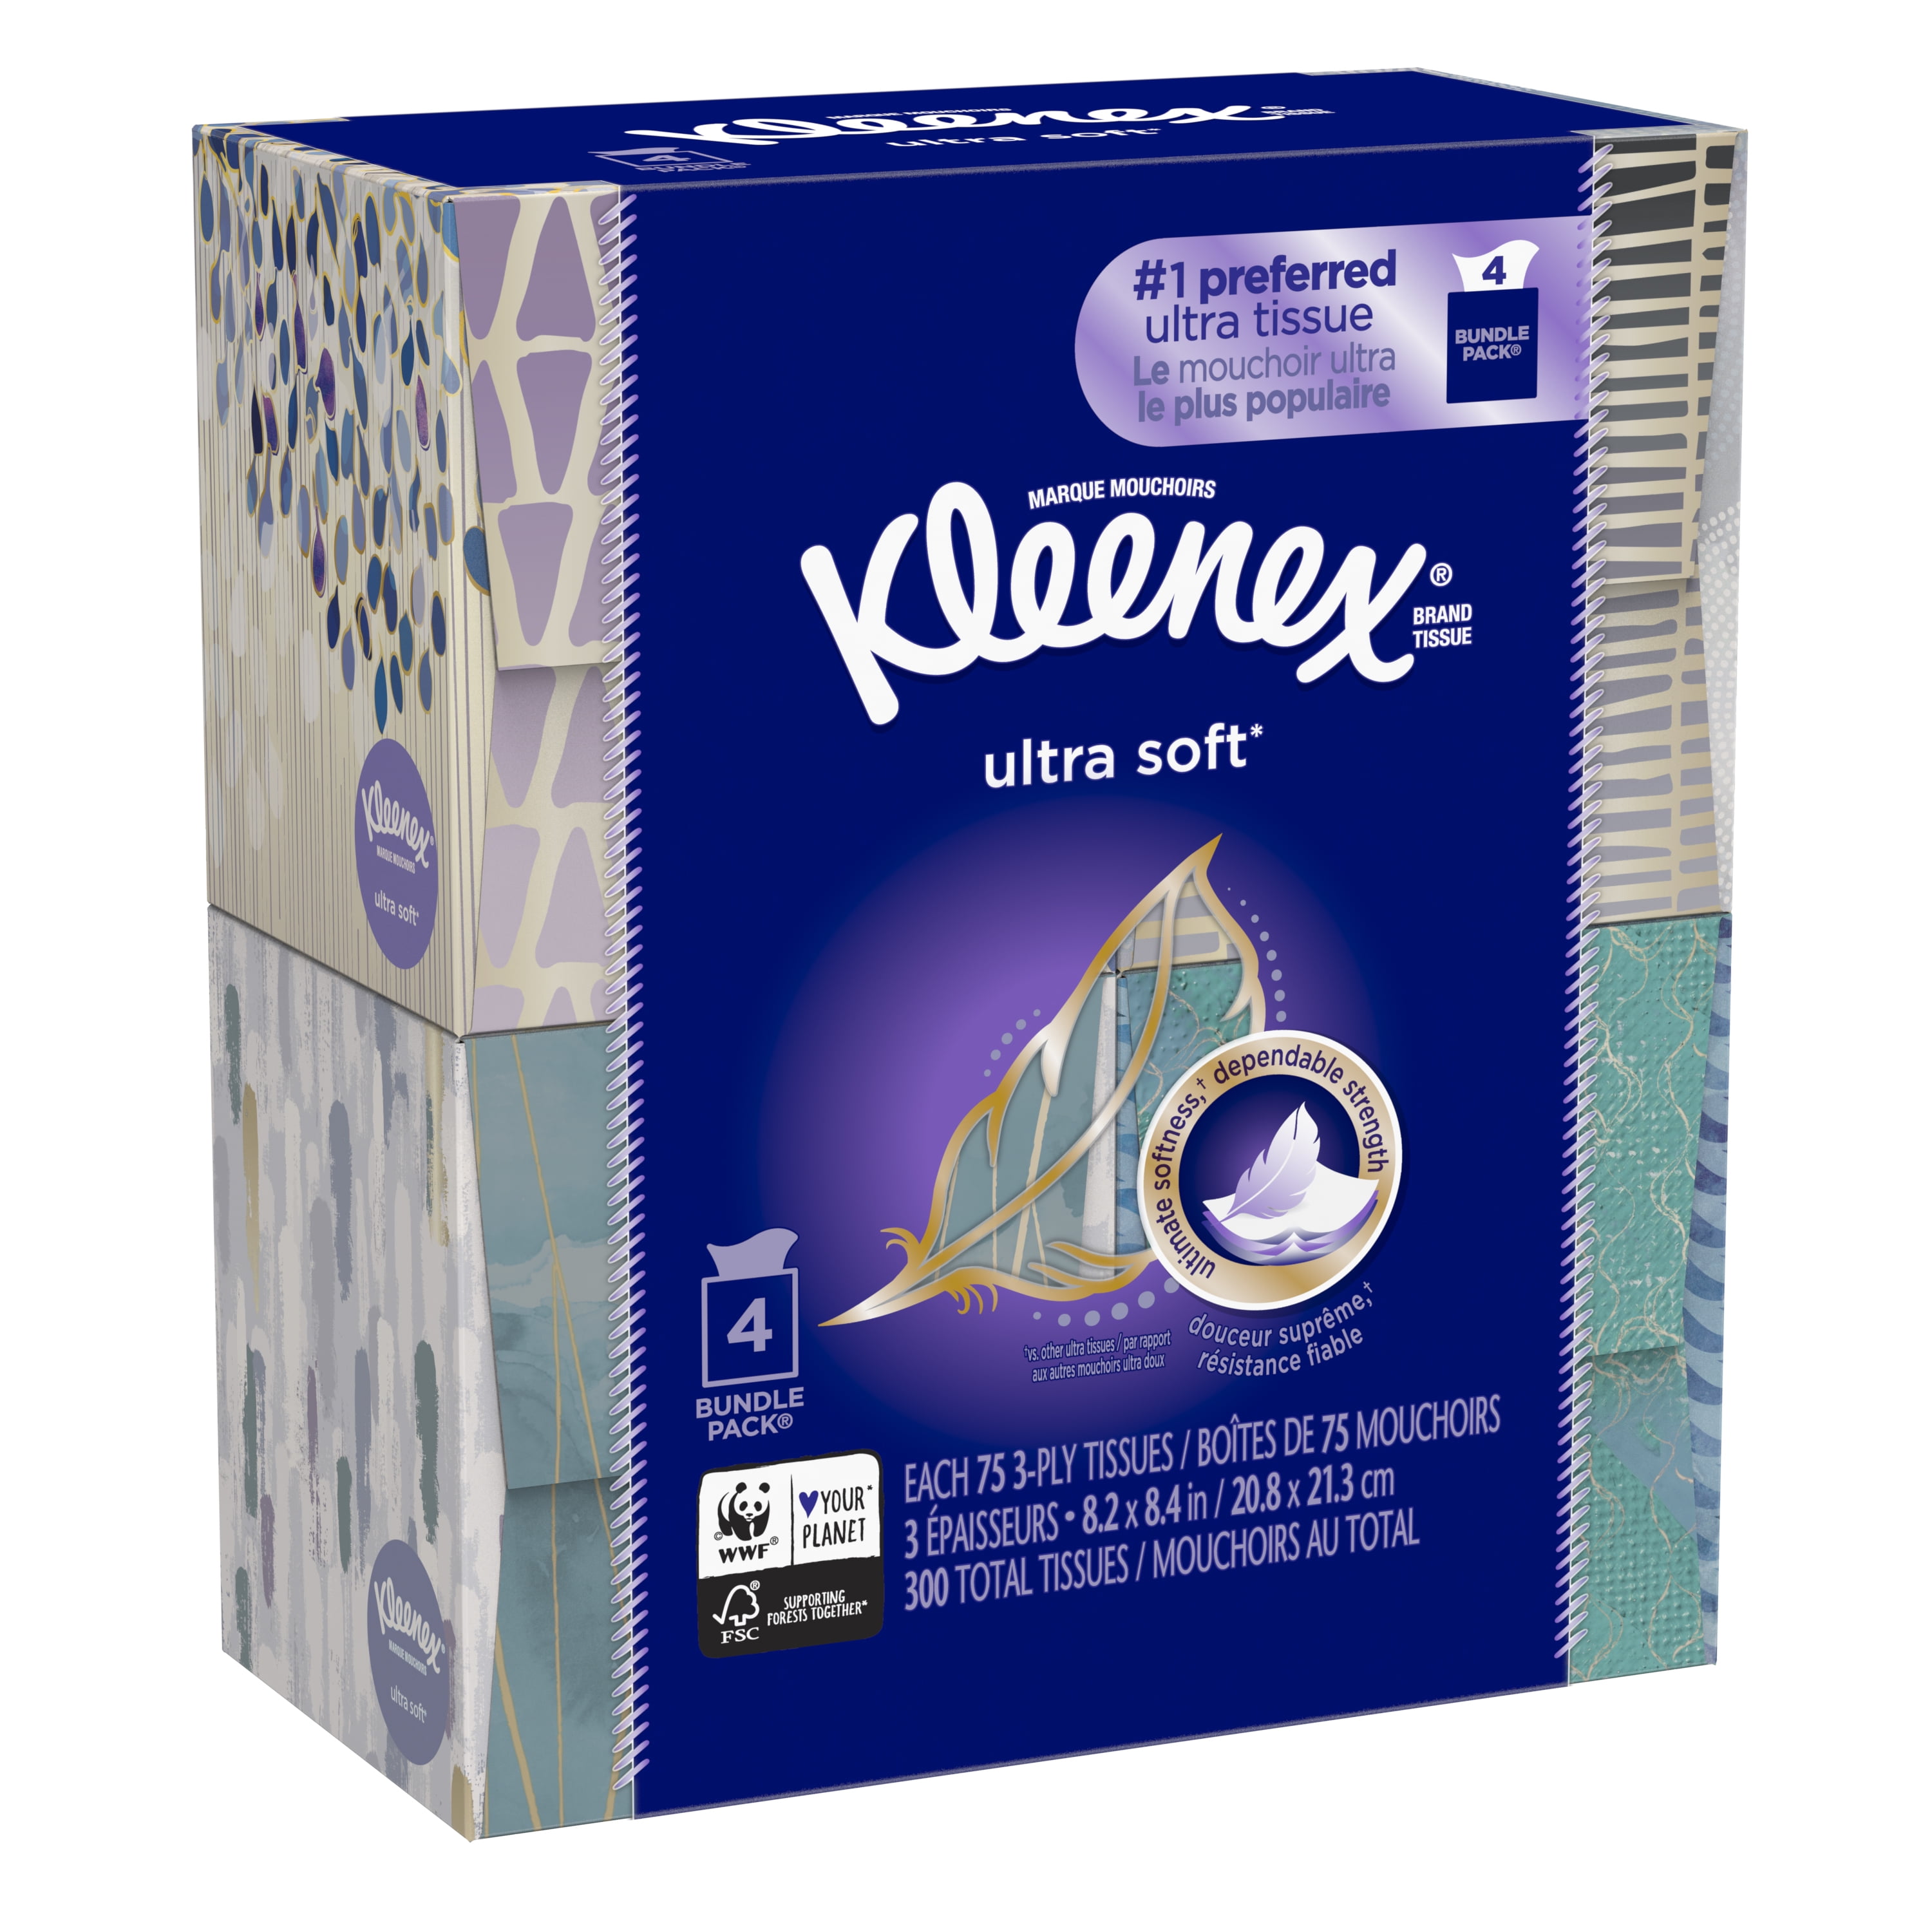 Kleenex Balsam Facial Tissues 6 Packs of 64 Sheets 